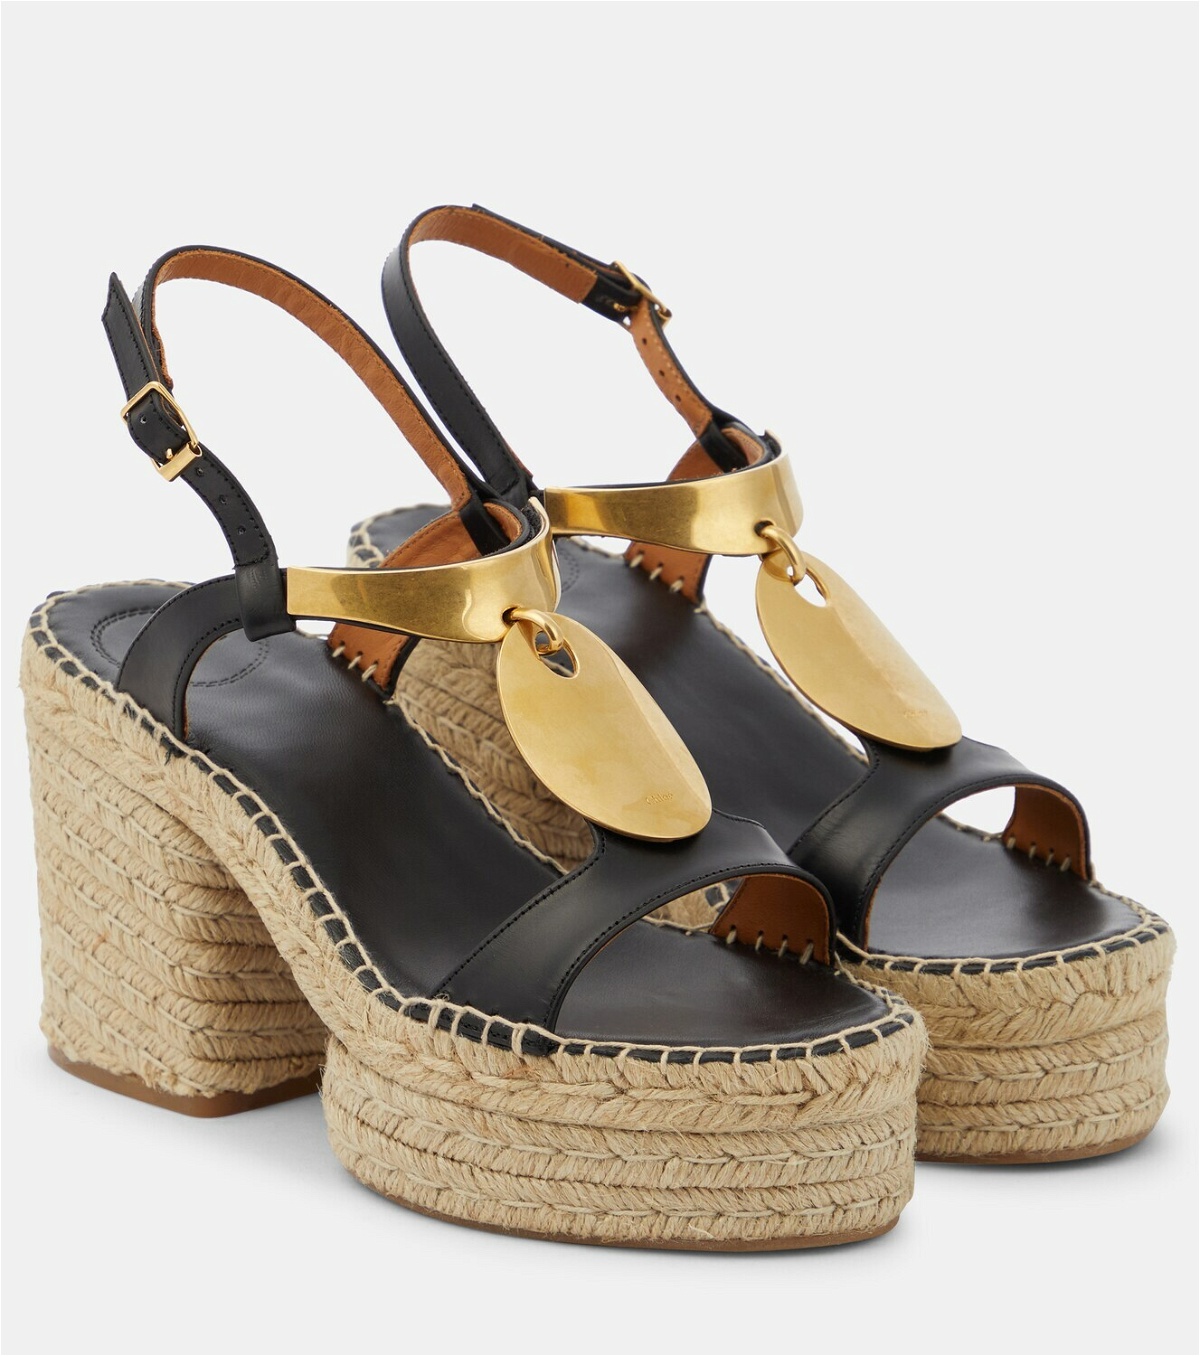 Share 190+ chloe leather wedge sandals super hot